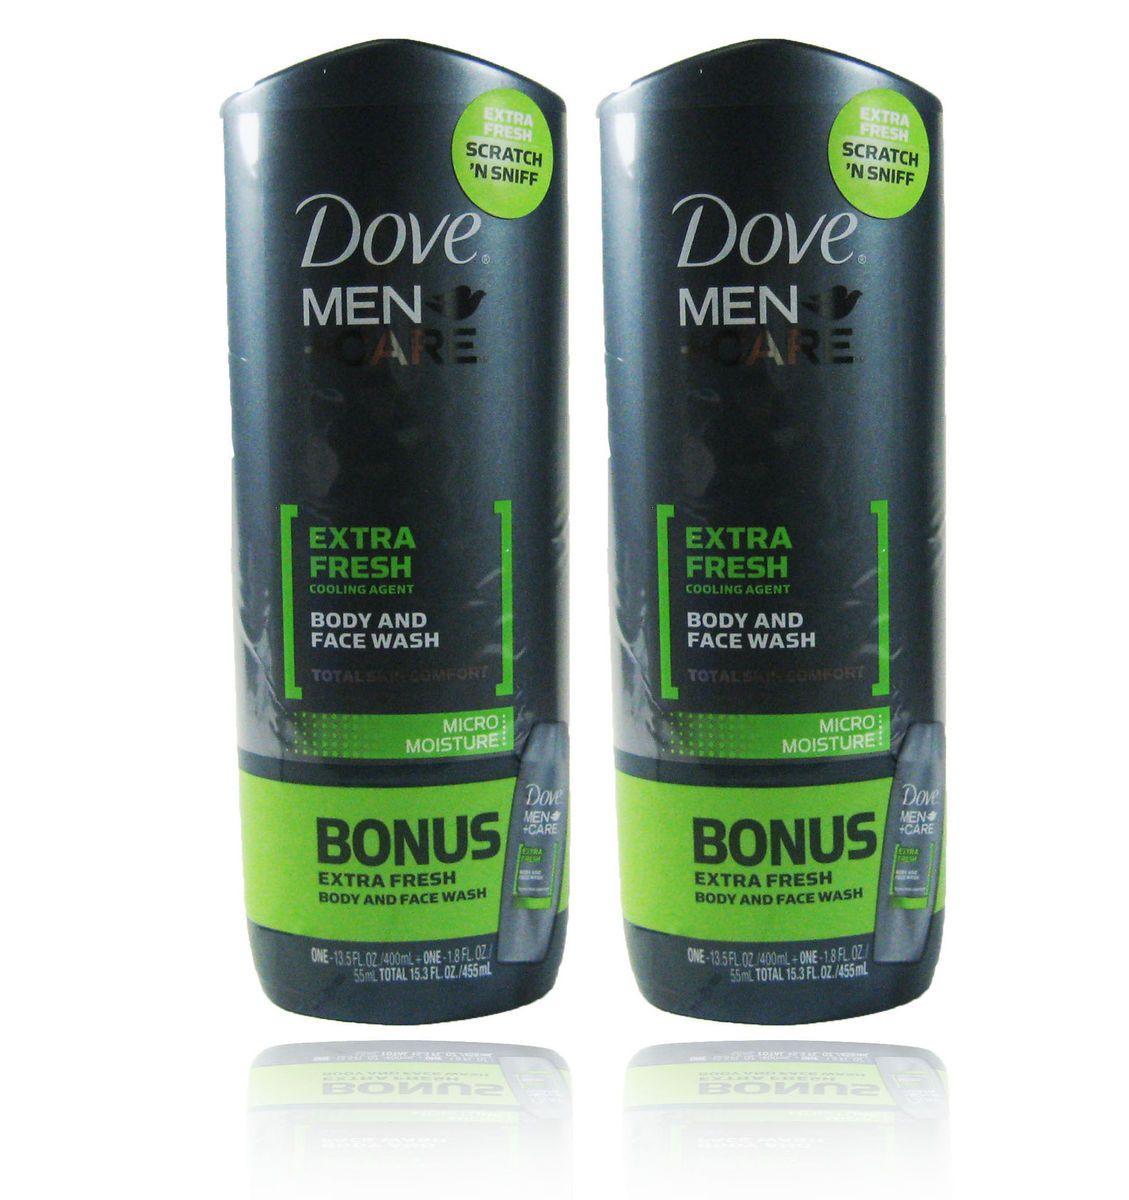 Dove Men + Care Extra Fresh Body and Face Wash 13.5oz + Bonus 1.8oz